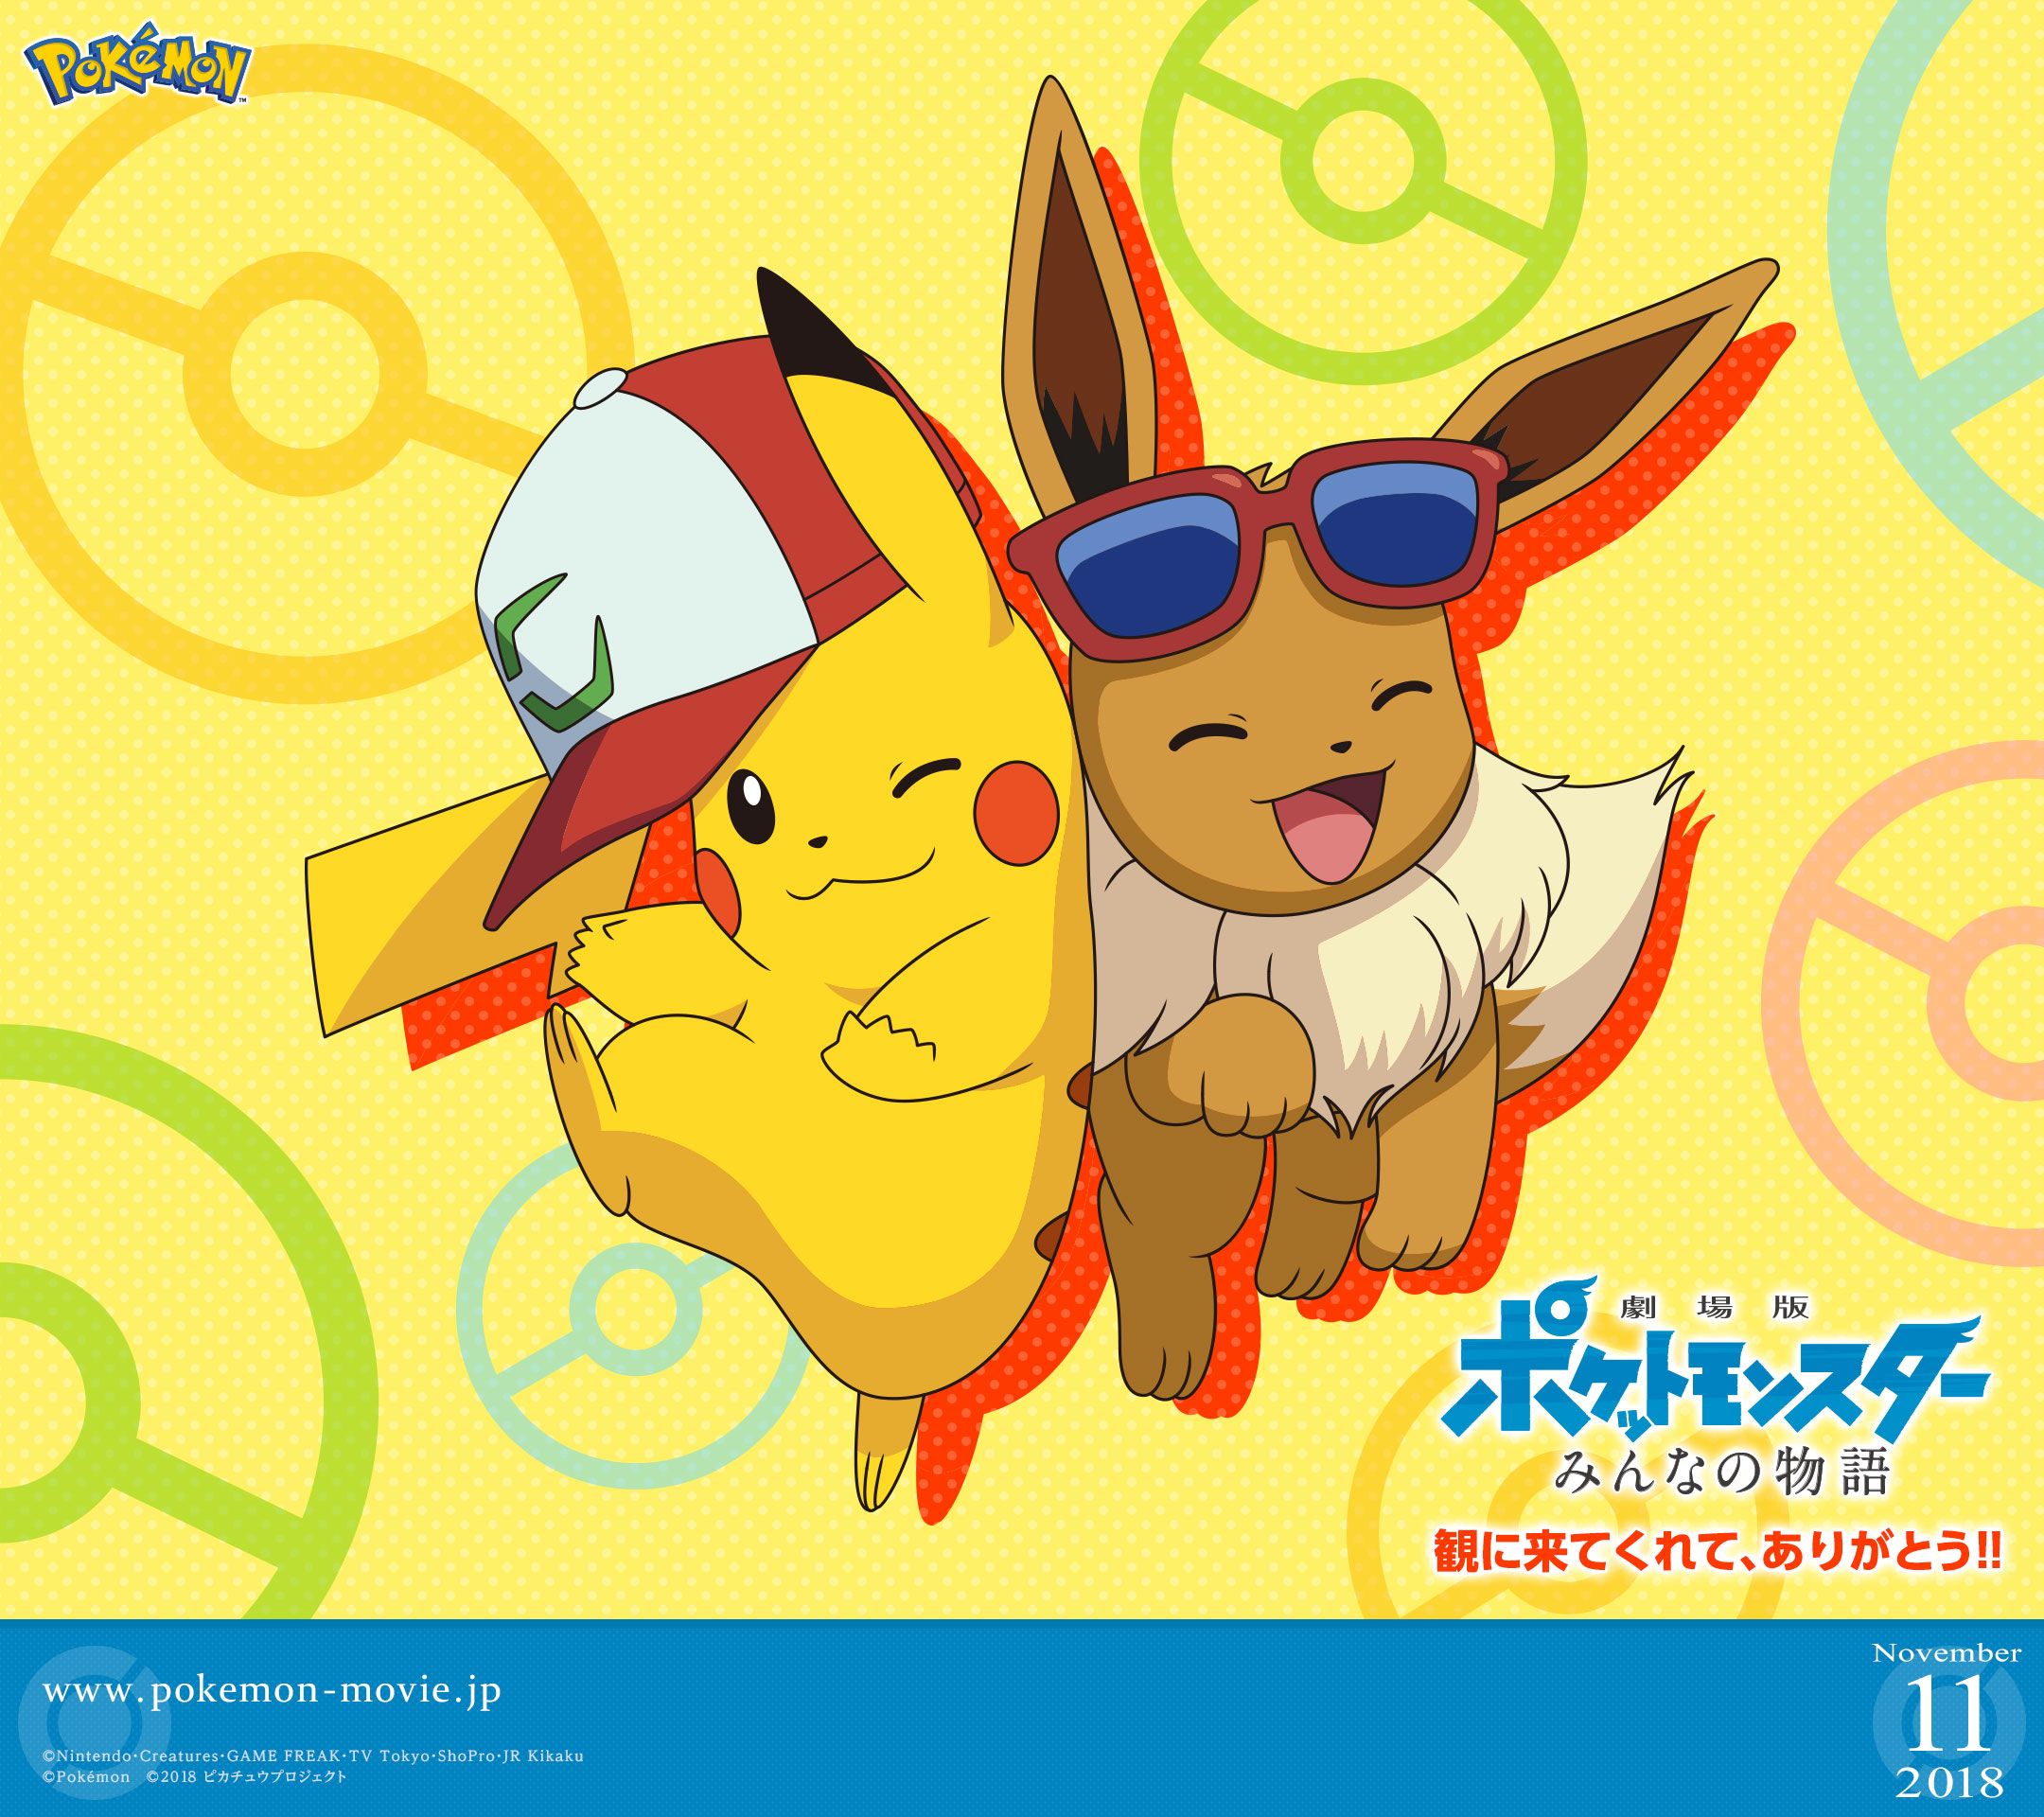 Pokémon The Movie: Minna no Monogatari (Pokémon The Movie: The Power Of Us) Mobile Wallpaper Anime Image Board